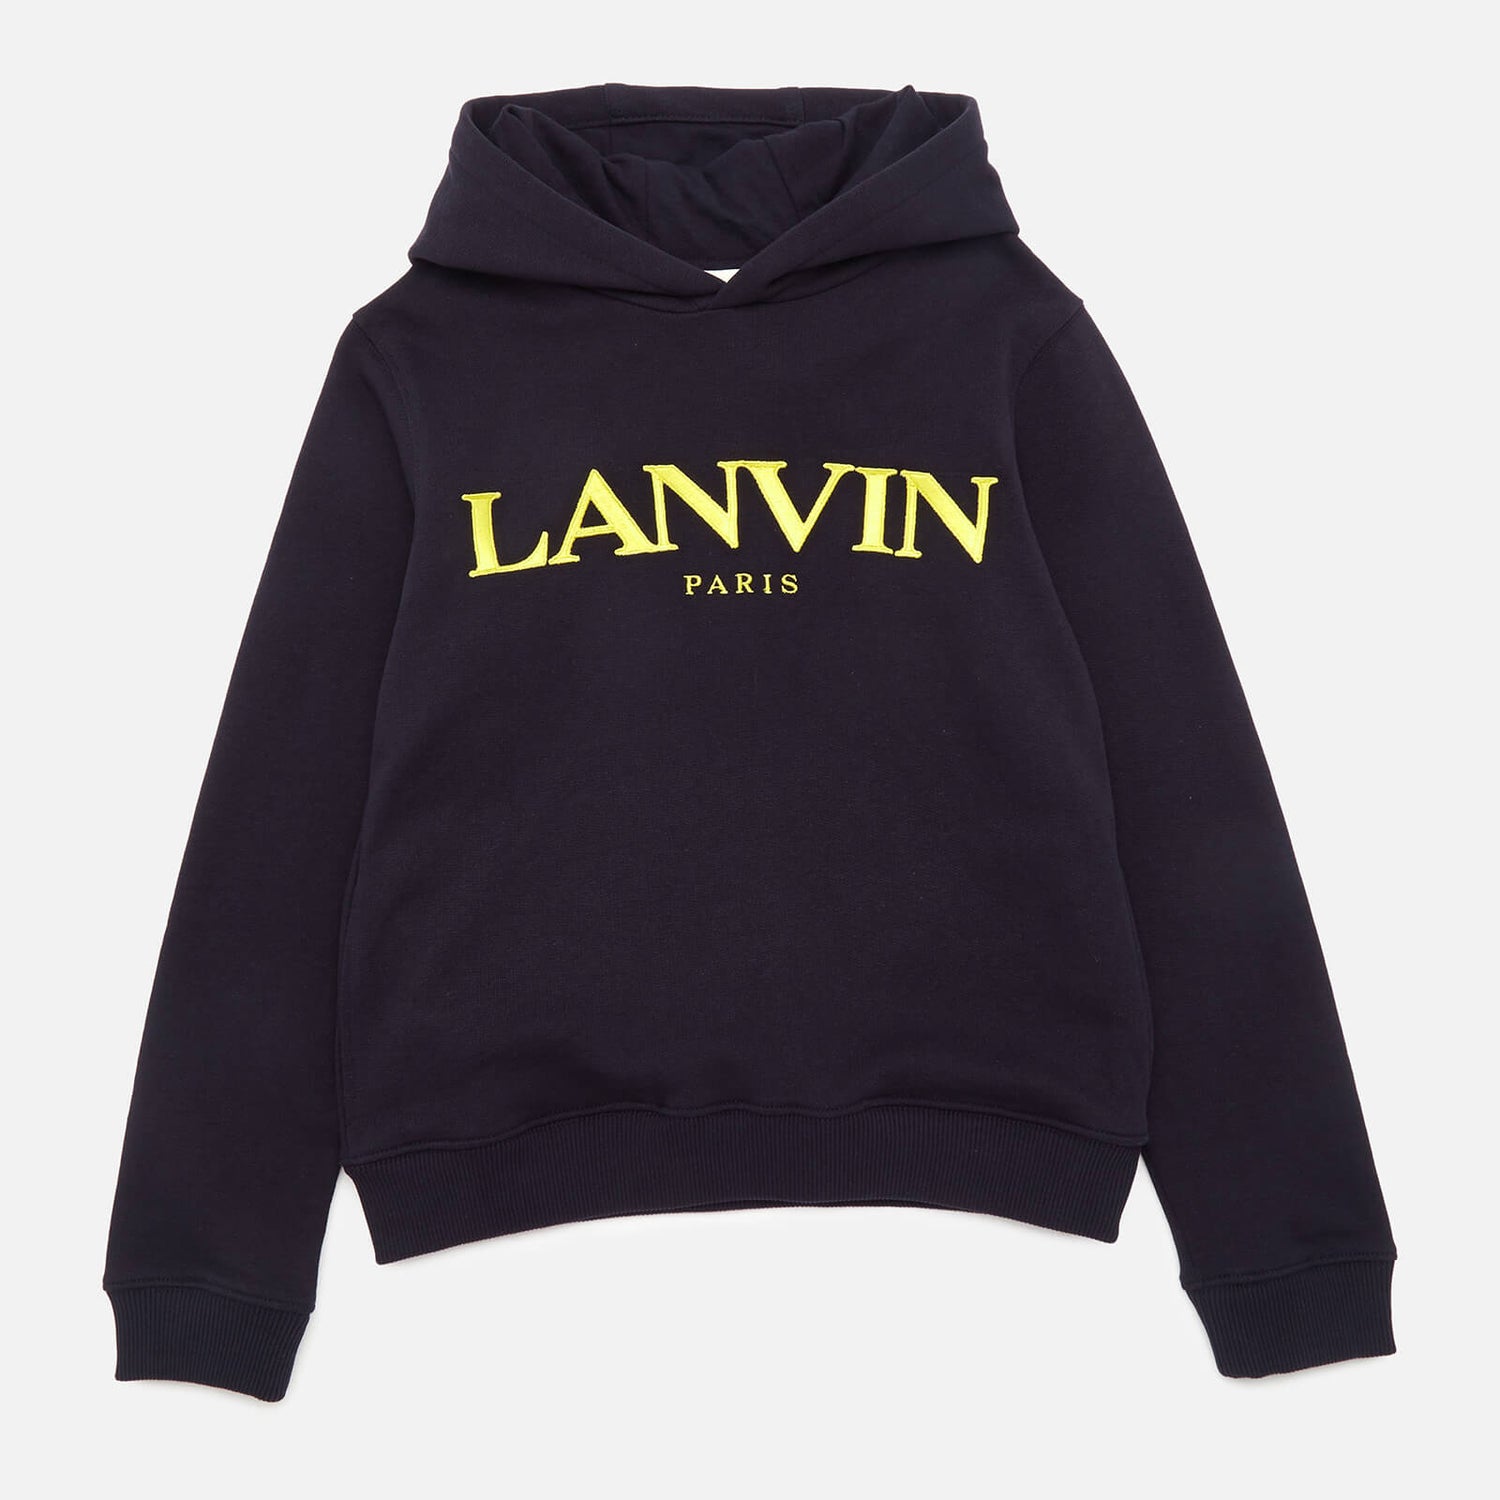 Lanvin Boys' Hooded Sweatshirt - Navy - 6 Years